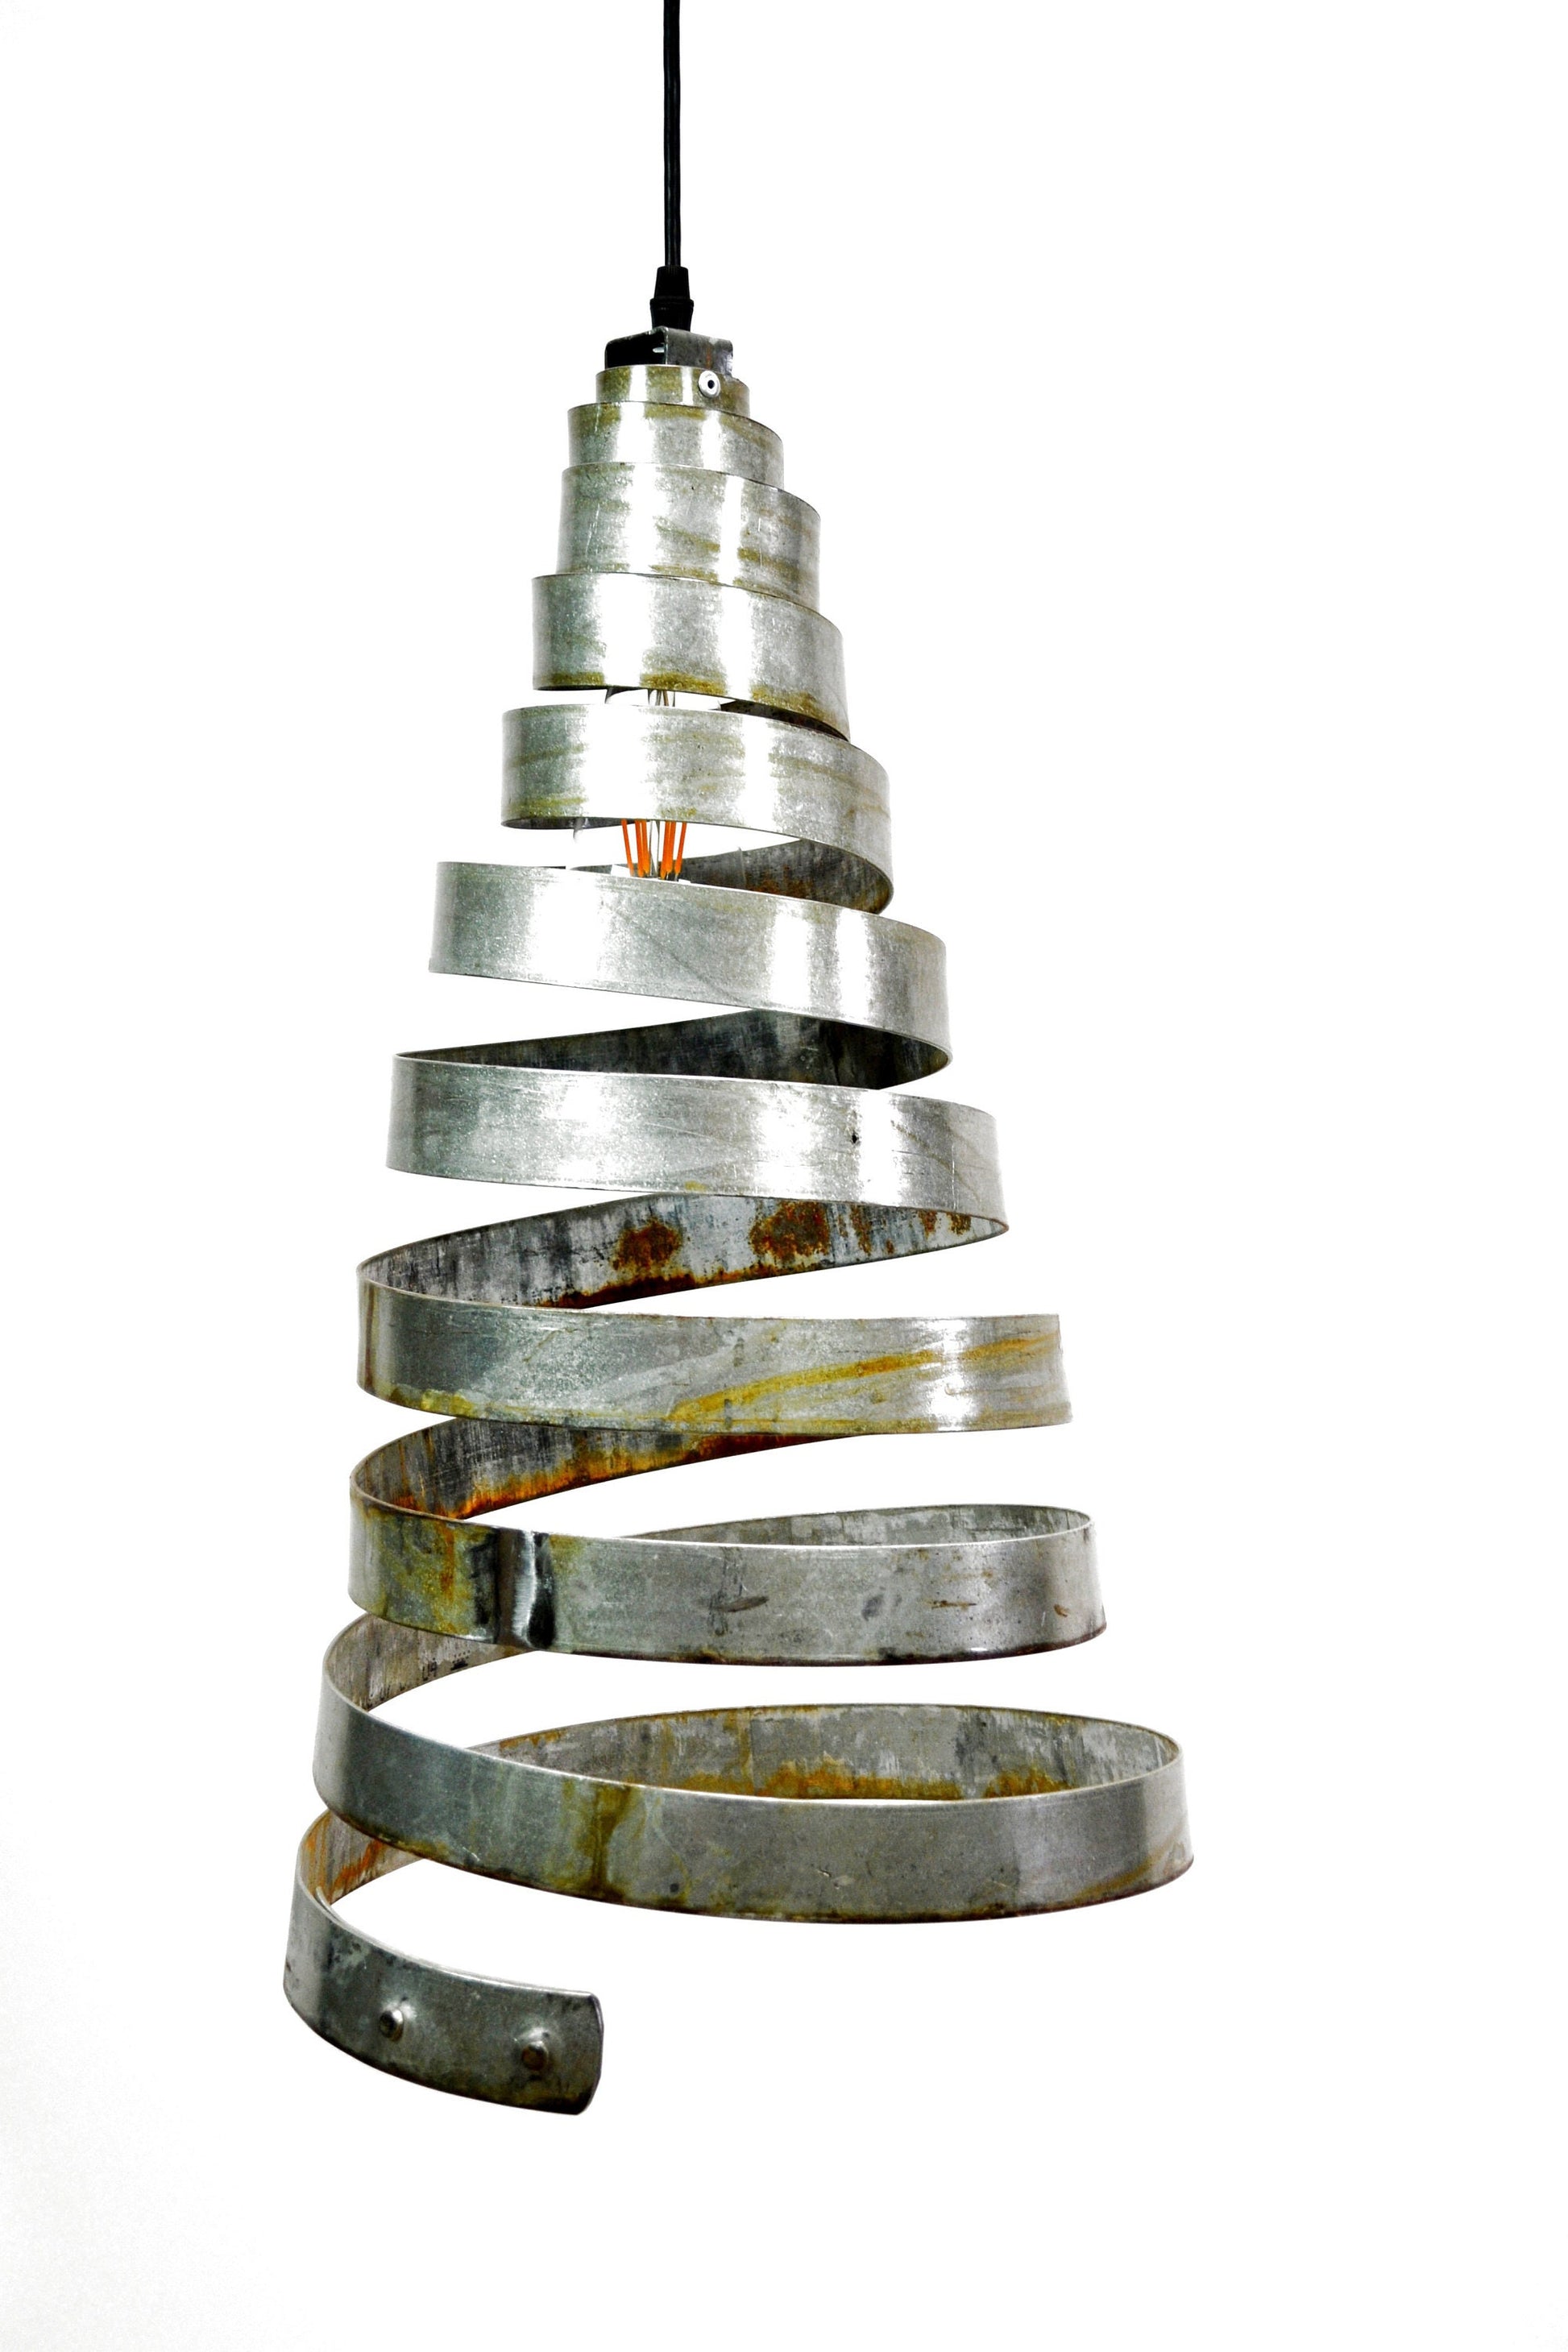 Wine Barrel Ring Pendant Light - Kahara - Made from retired California wine barrel rings - 100% Recycled!